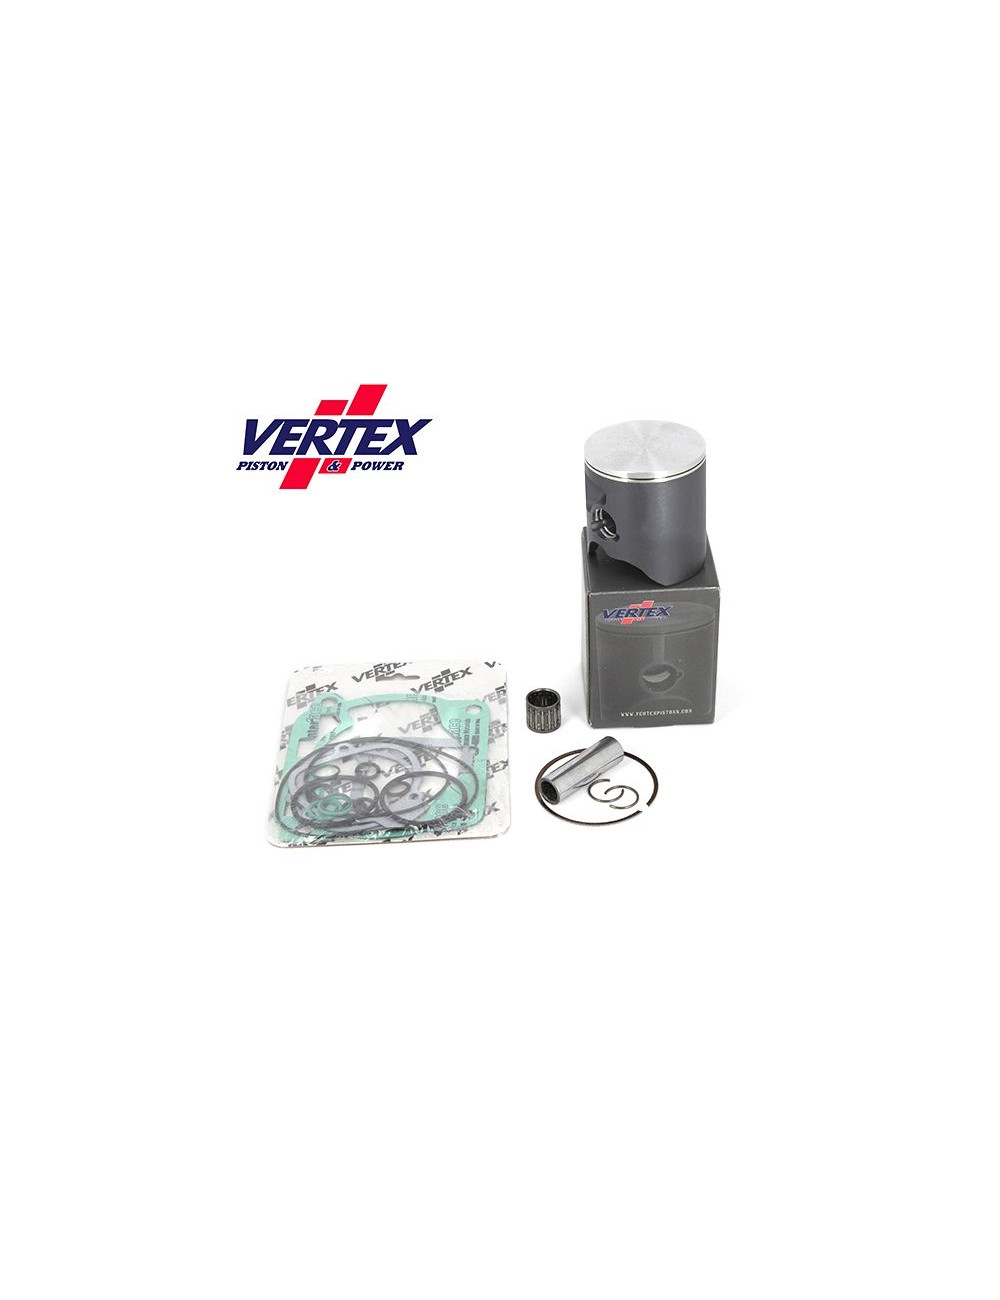 Kit Piston 2 Temps Vertex Kit Piston Complet 2 Temps - SX 85 GRANDES ROUES - Cote B - O46,95mm